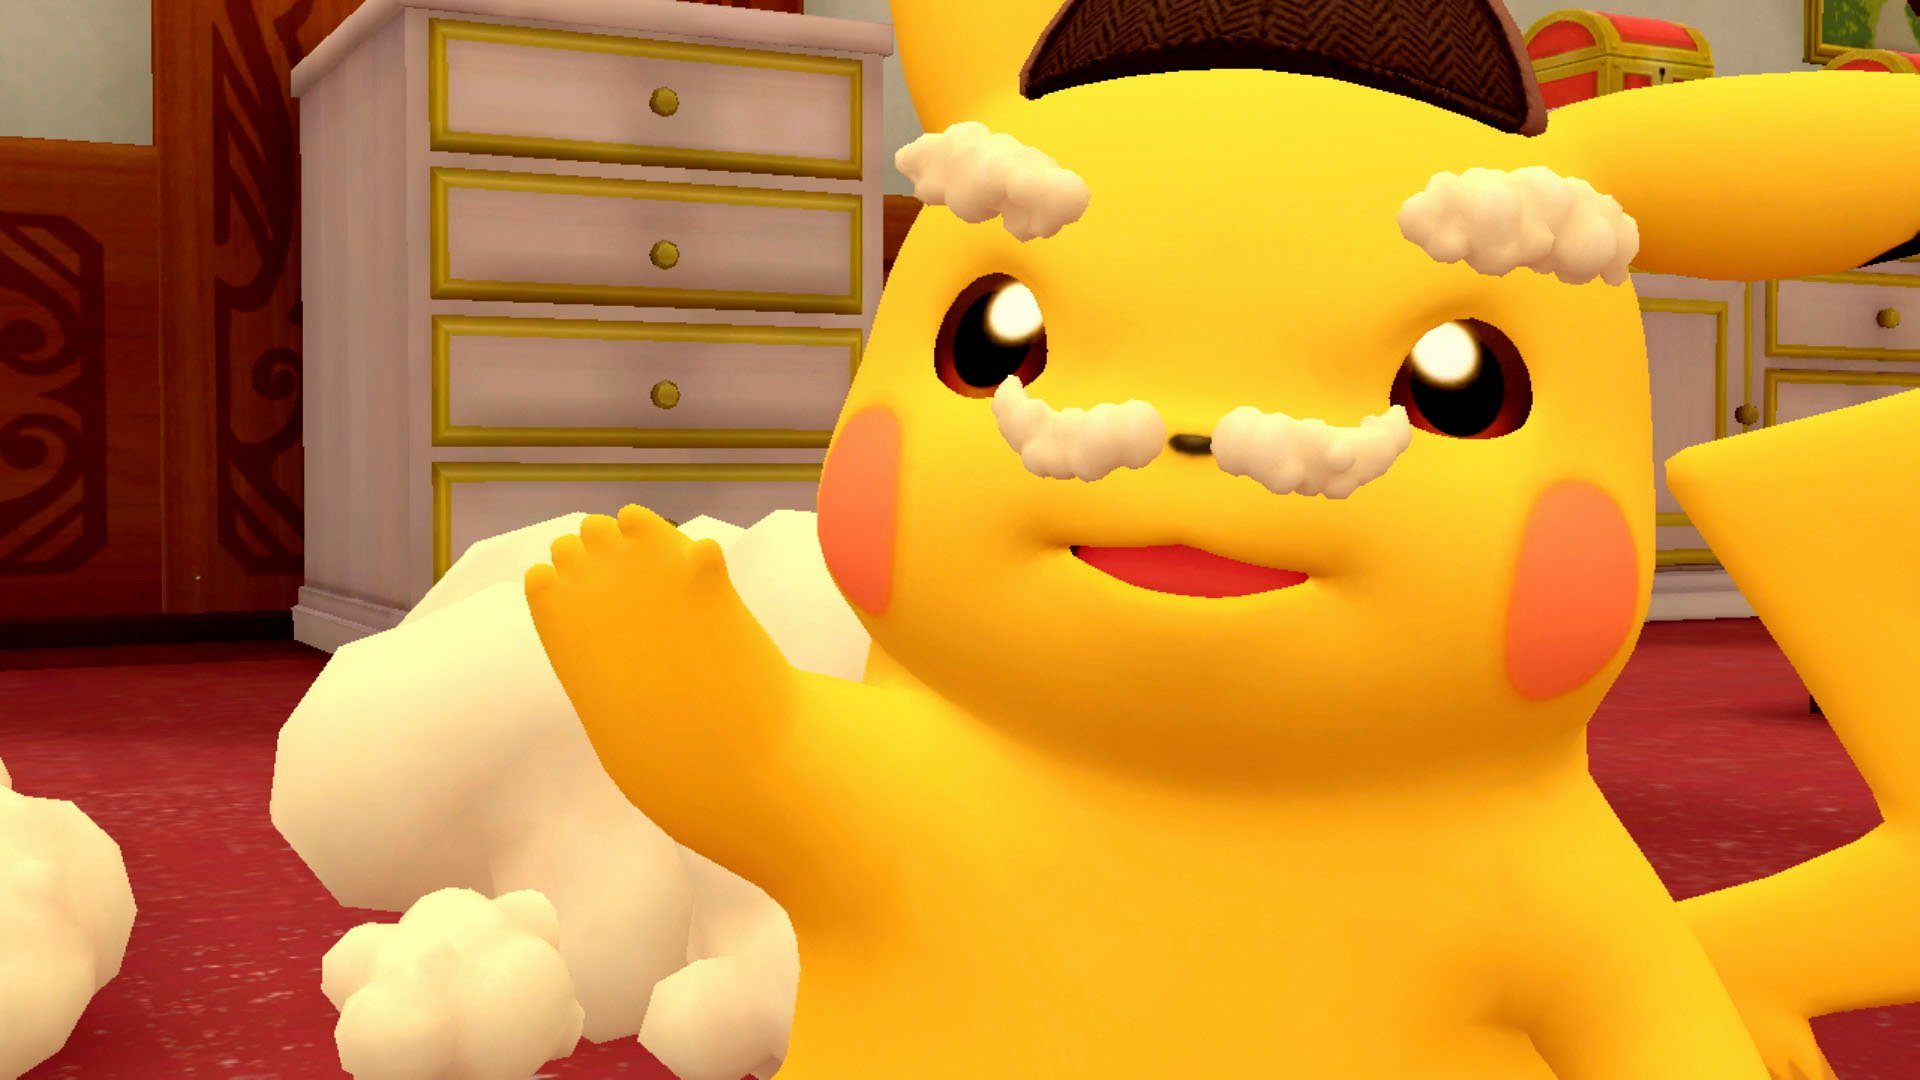 Meisterdetektiv Pikachu kehrt zurück Nintendo Switch